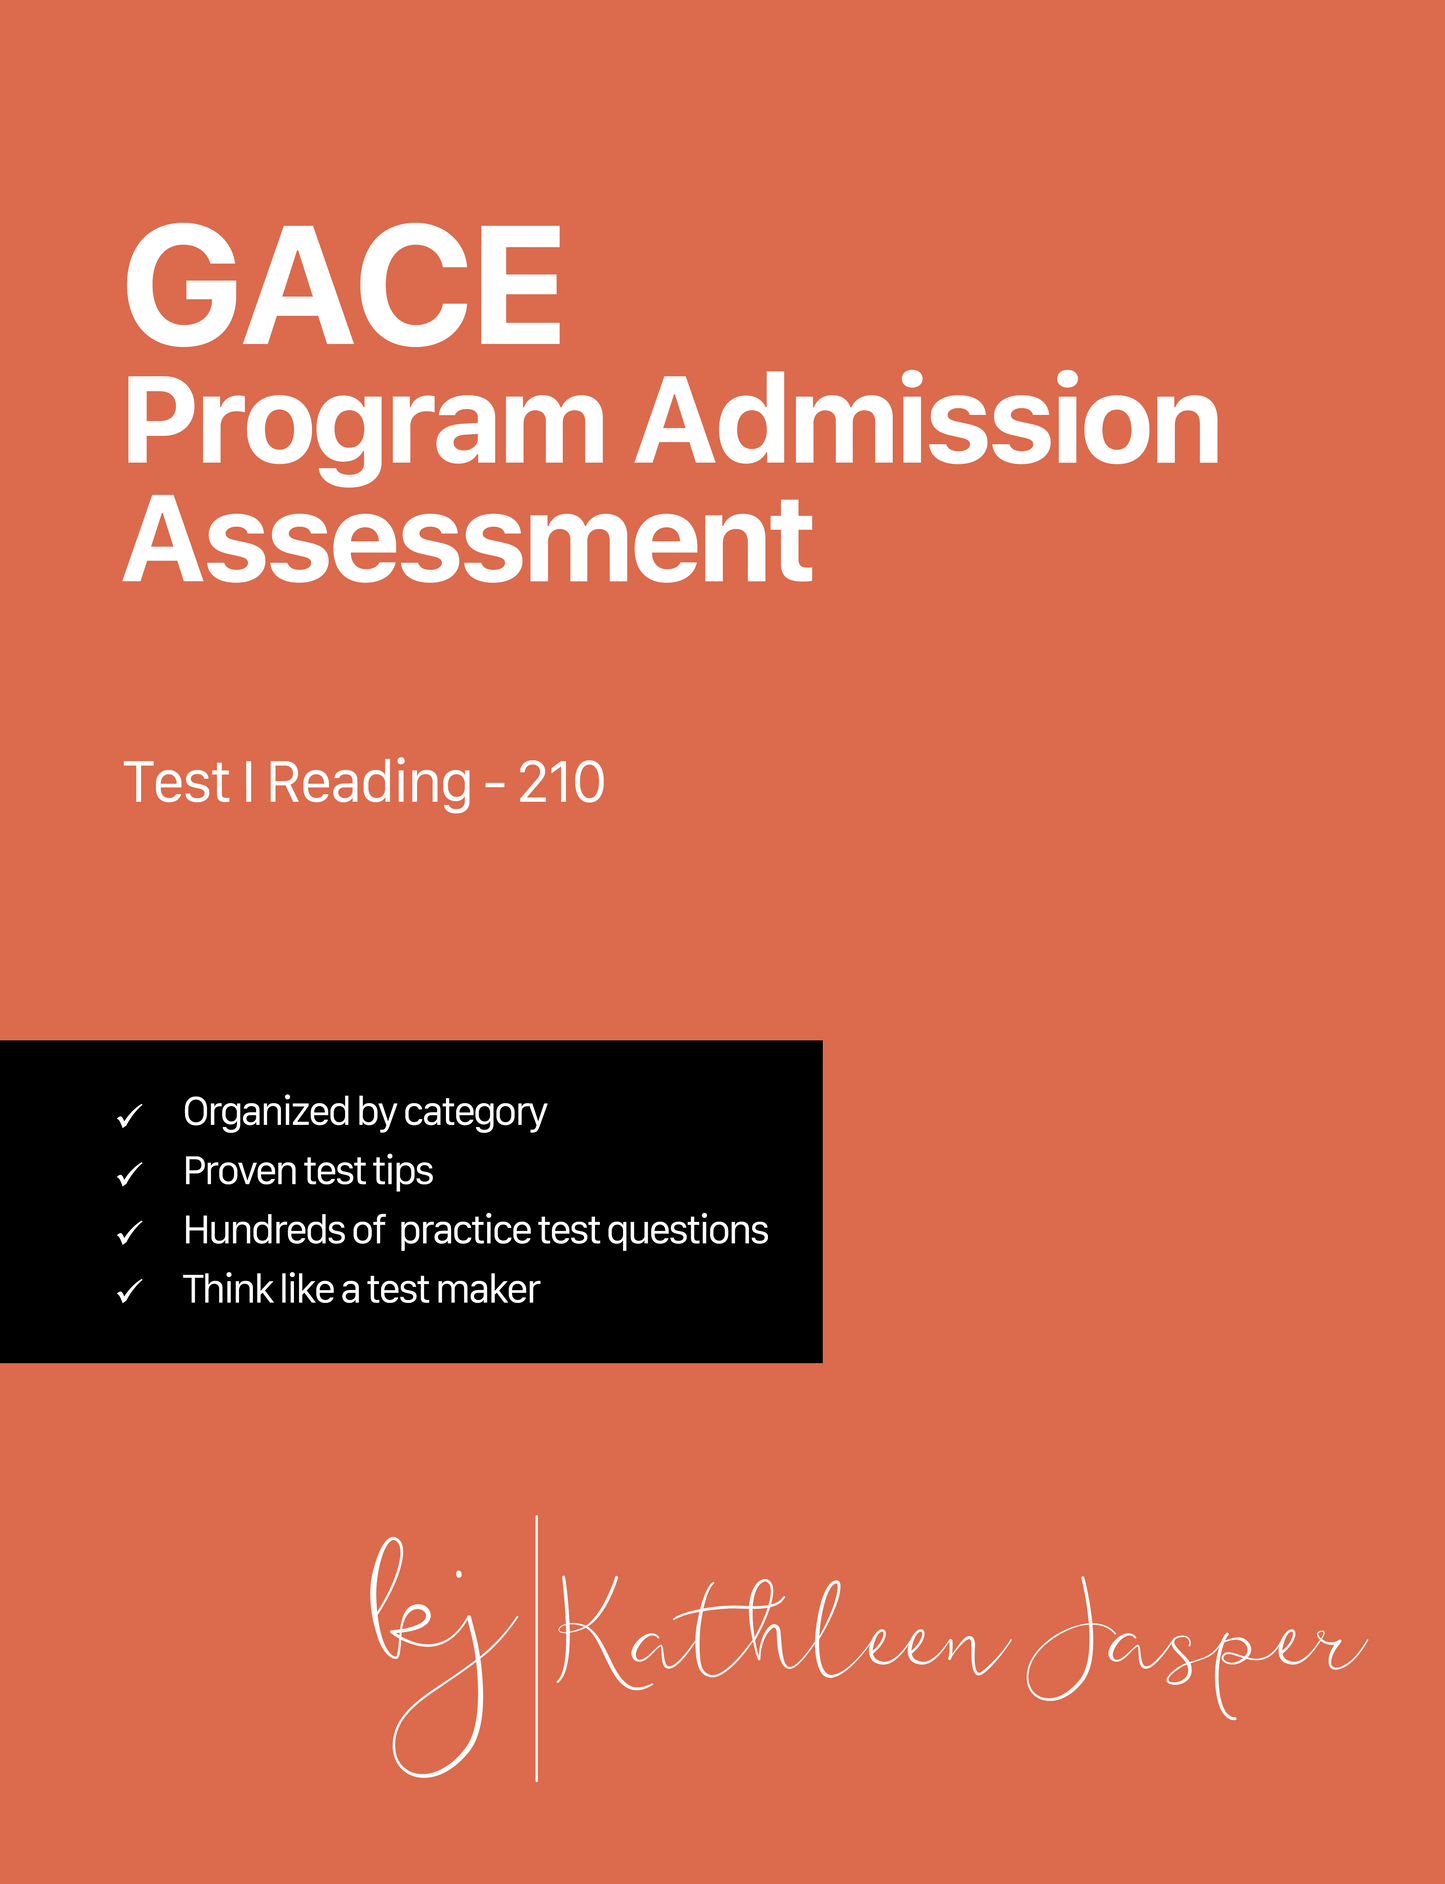 GACE Program Admission Assessment Test I Reading 210